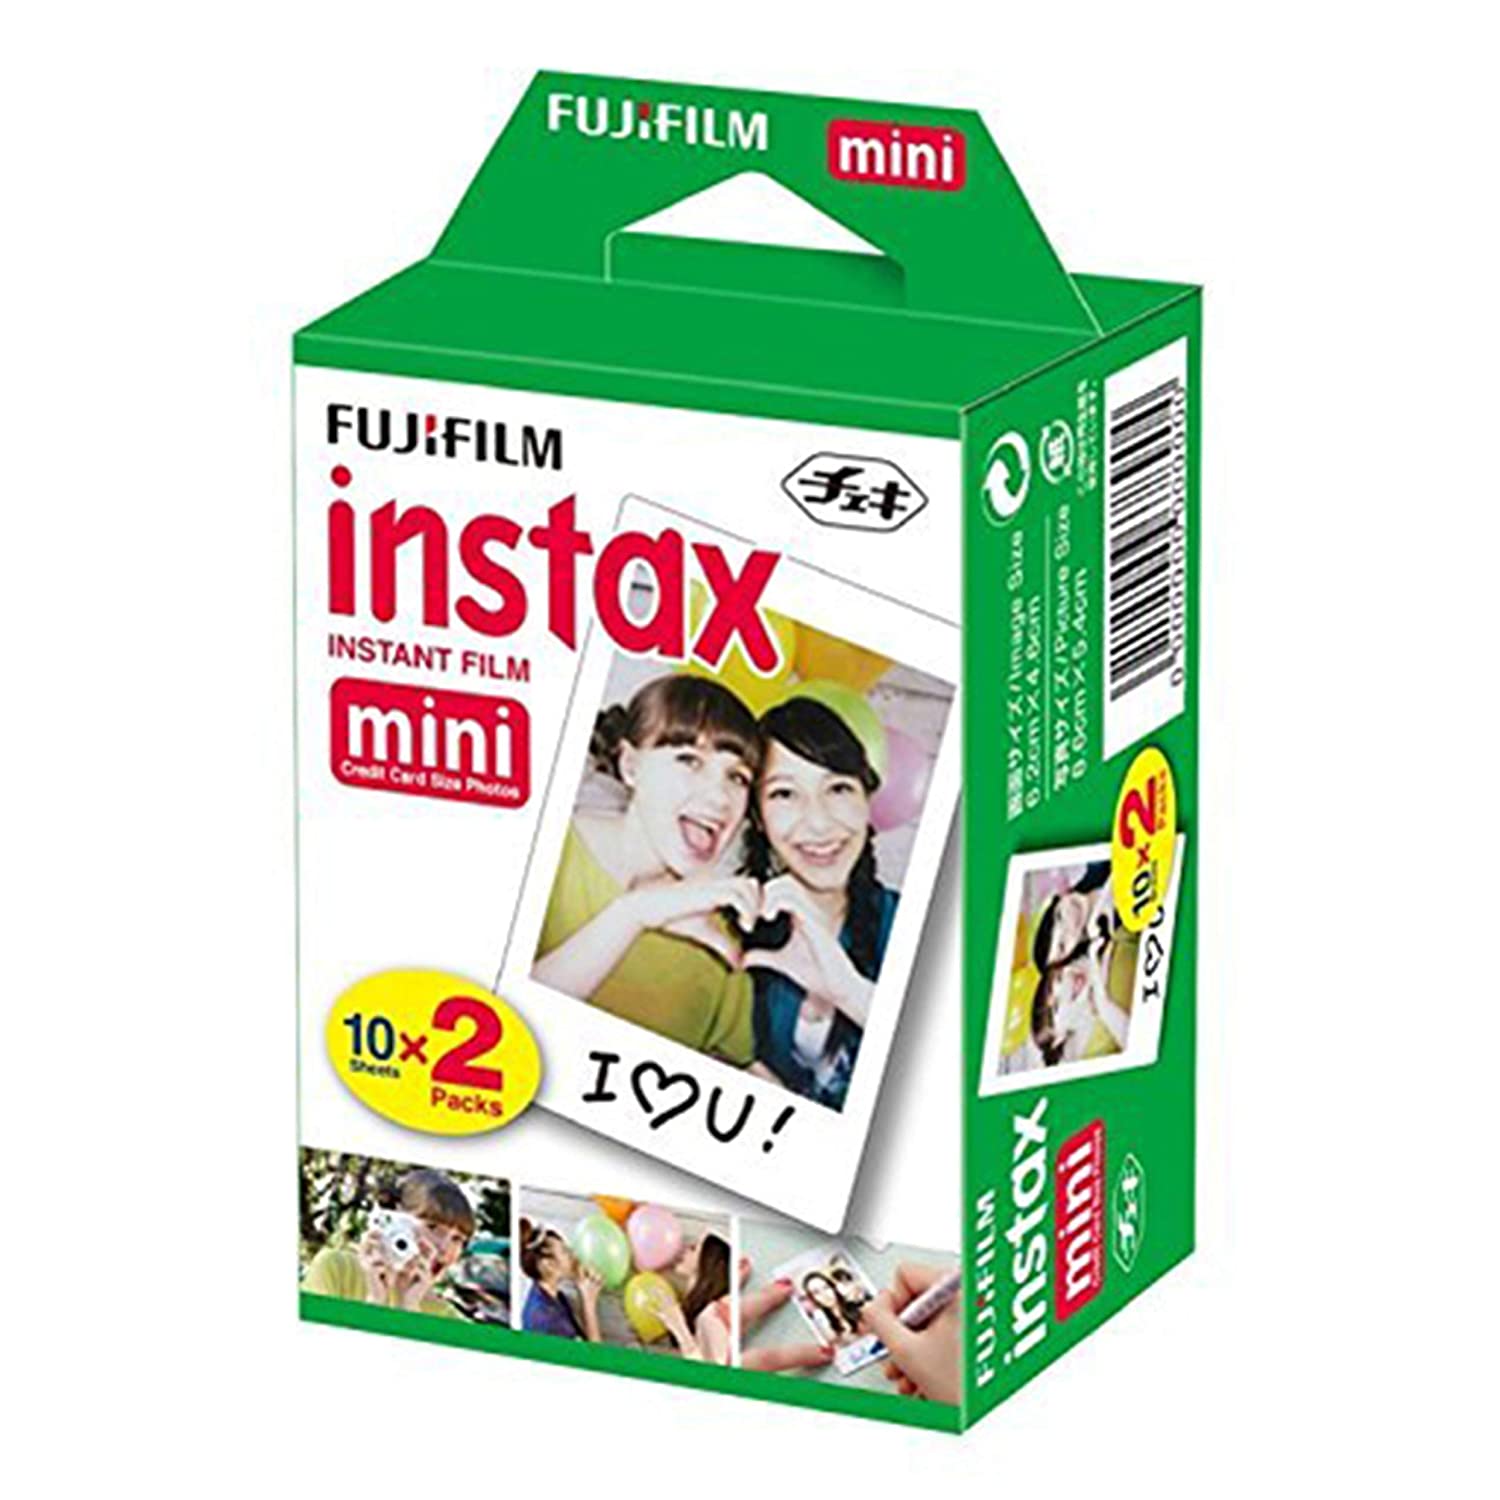 Fujifilm Instax Mini 8 Joy Box Grape